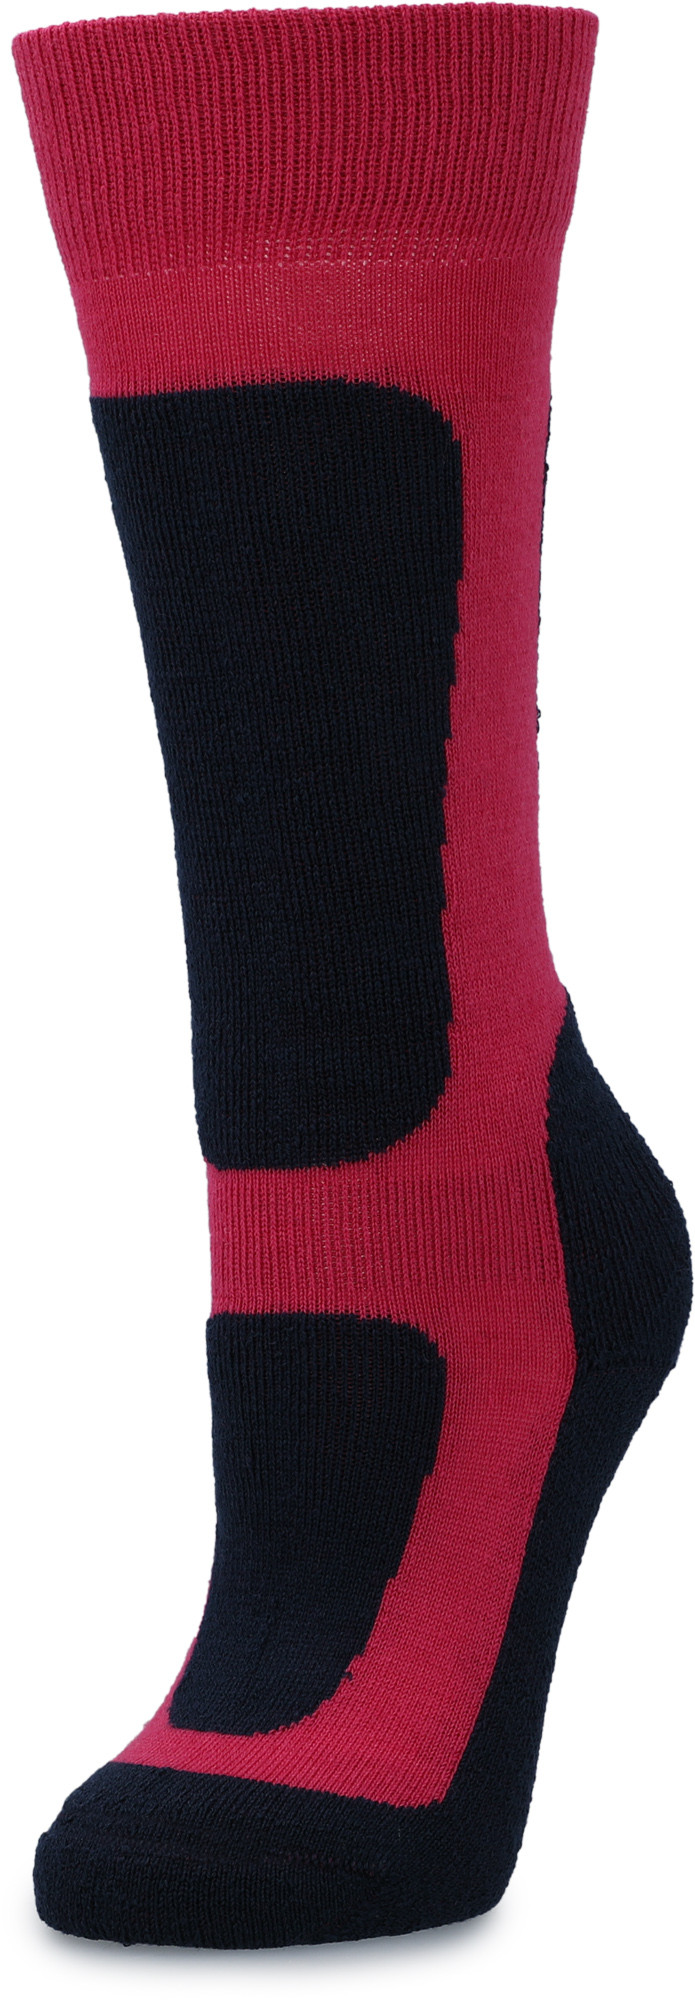 Шкарпетки дитячі Glissade, 1 пара